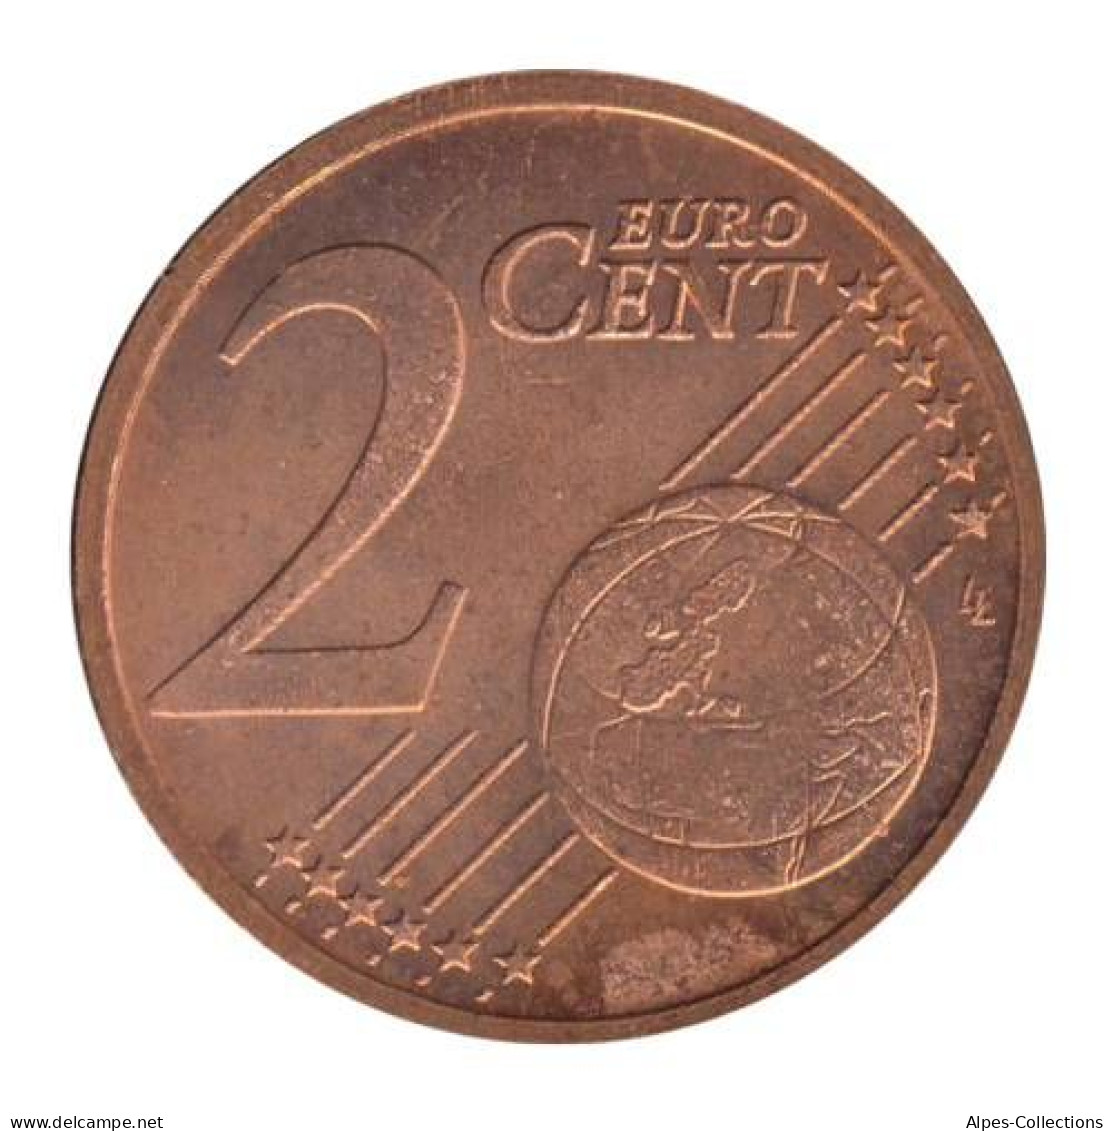 SQ00209.1 - SLOVAQUIE - 2 Cents - 2009 - Slowakei